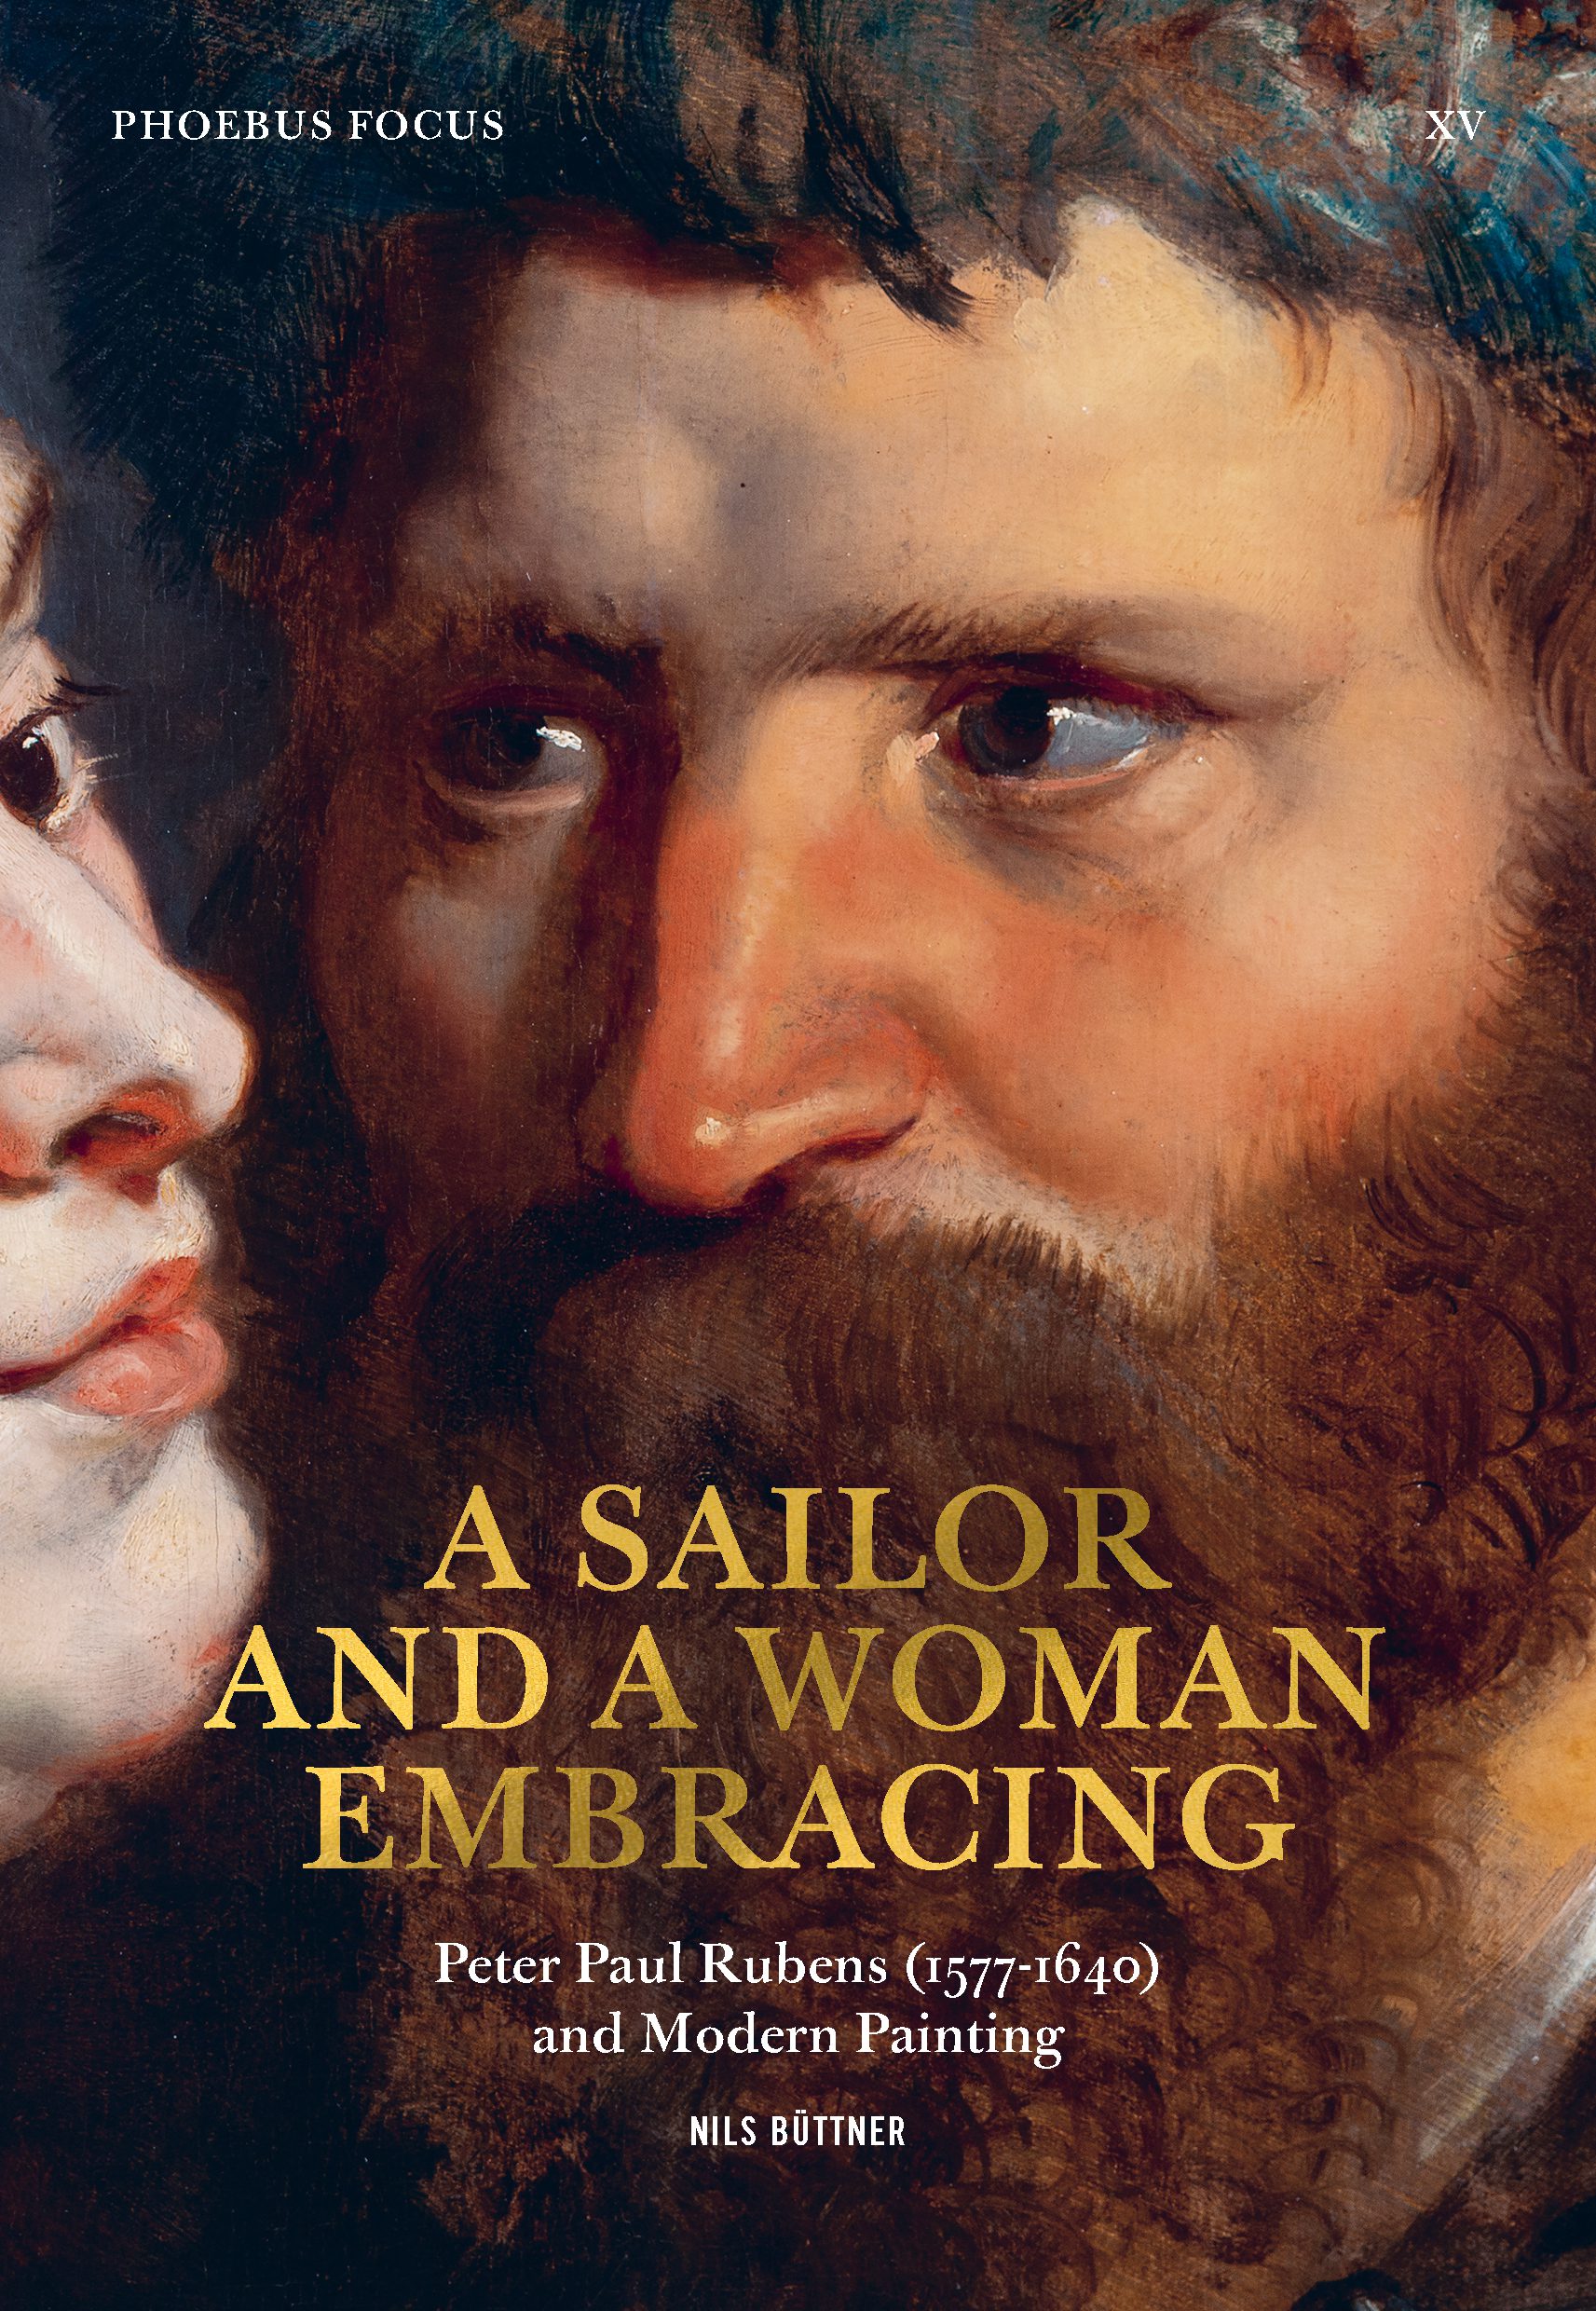 A sailor and a woman embracing